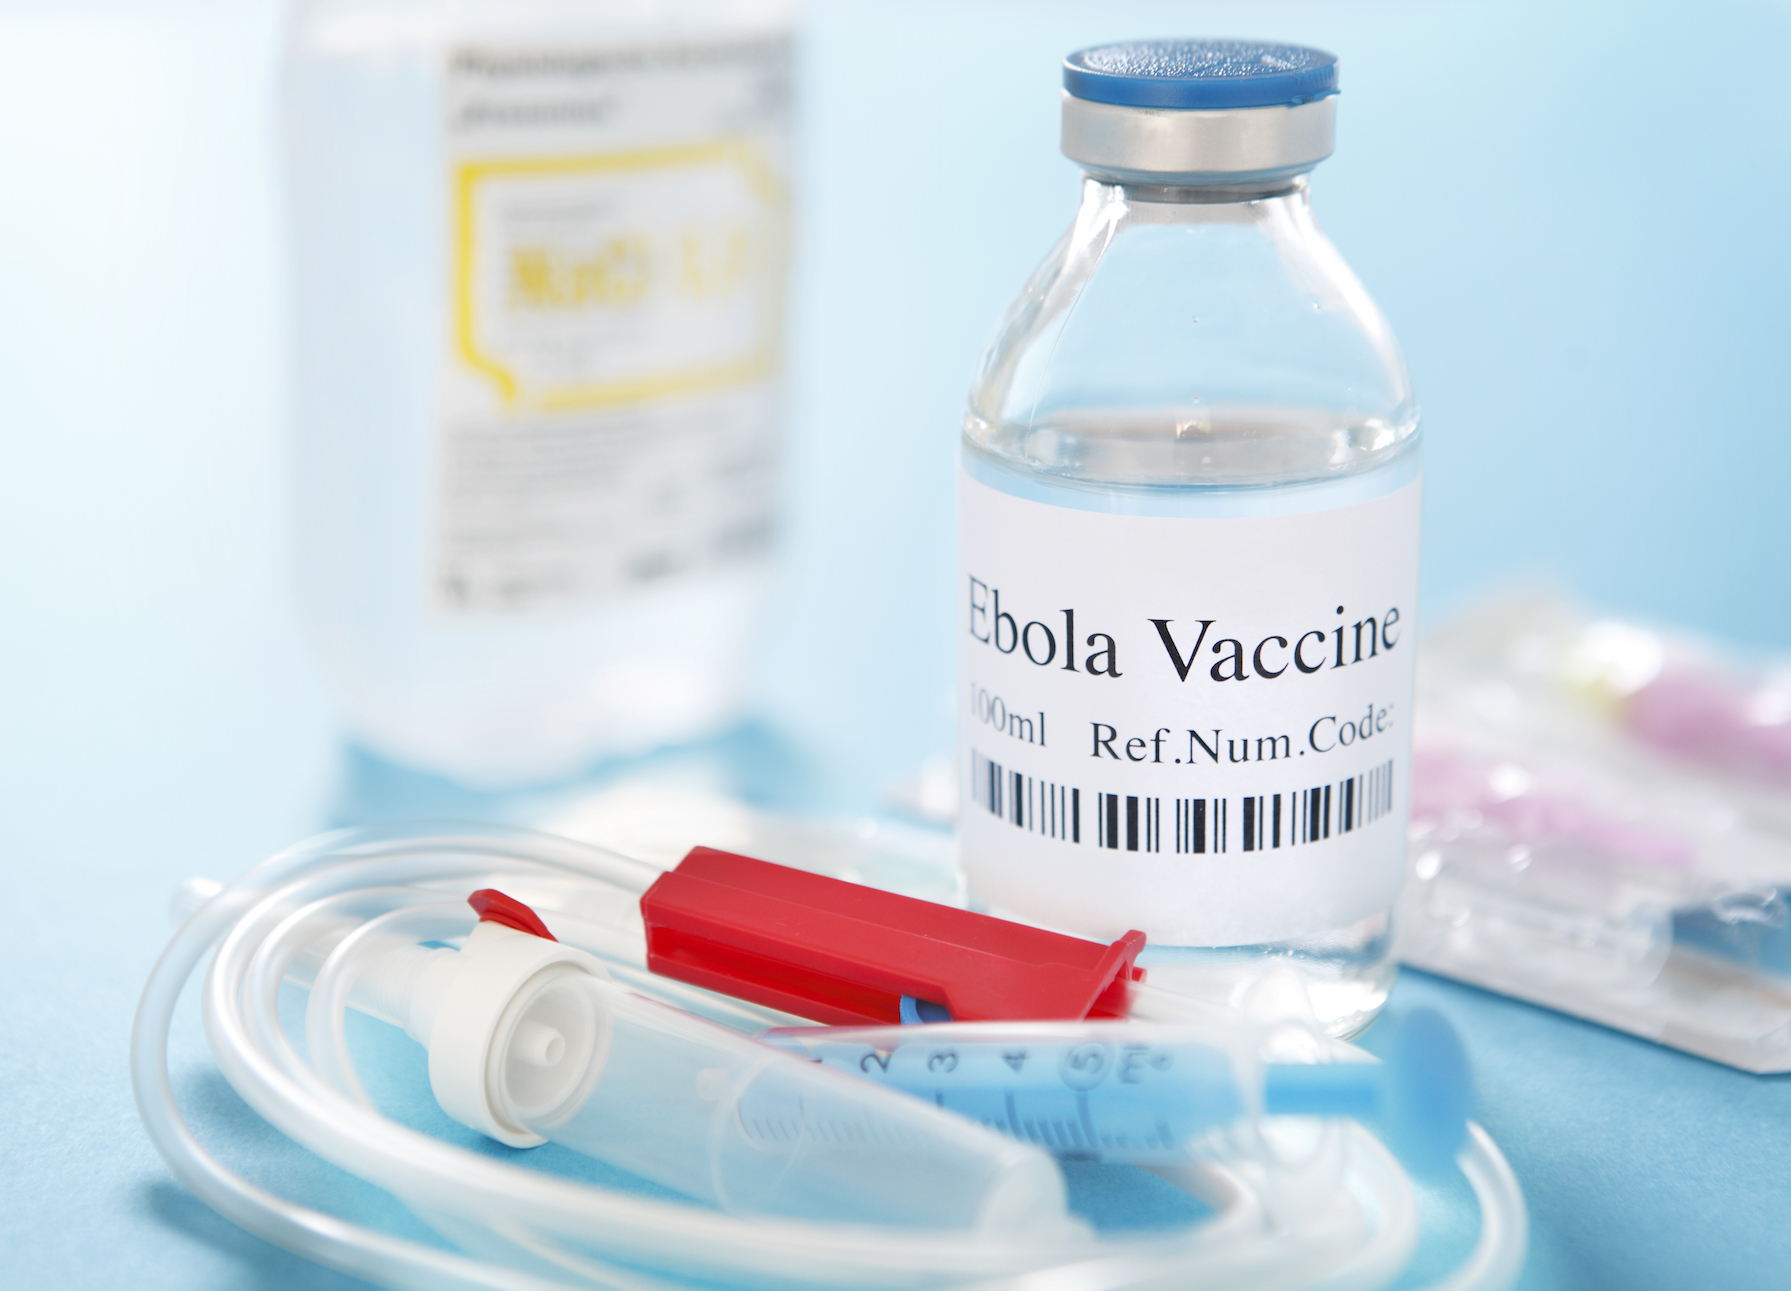 Virus vaccine. Изображение вакцины. Вирус полиомиелита вакцина.